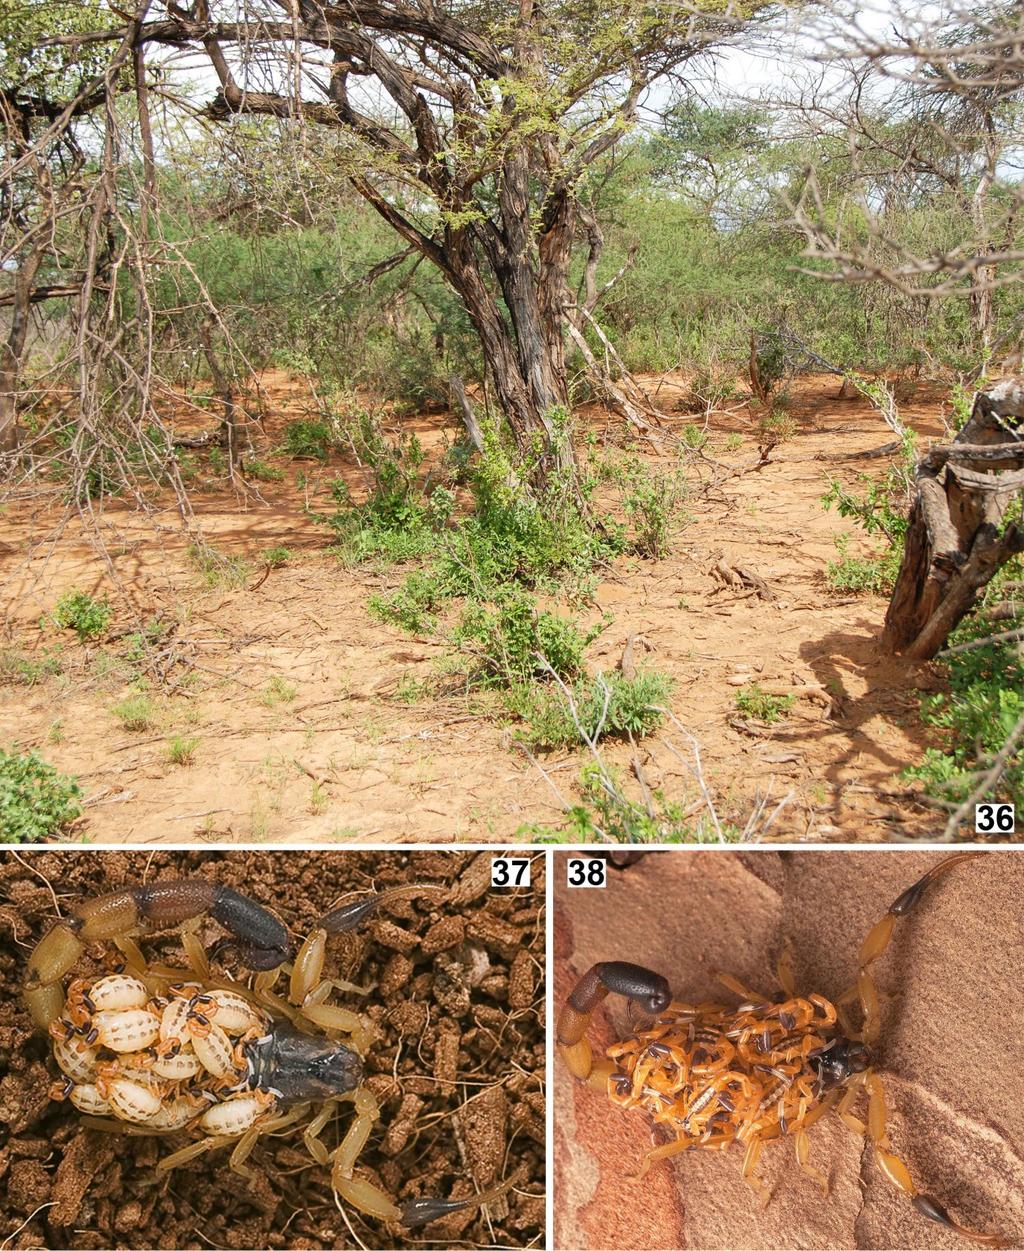 Kovařík et al.: Scorpions of Ethiopia. Uroplectes 7 Figures 36 38: Uroplectes fischeri, locality 14EI (36), Ethiopia, Somali State, Liben region, between Filtu and Dolo Odo, 04 50'07.